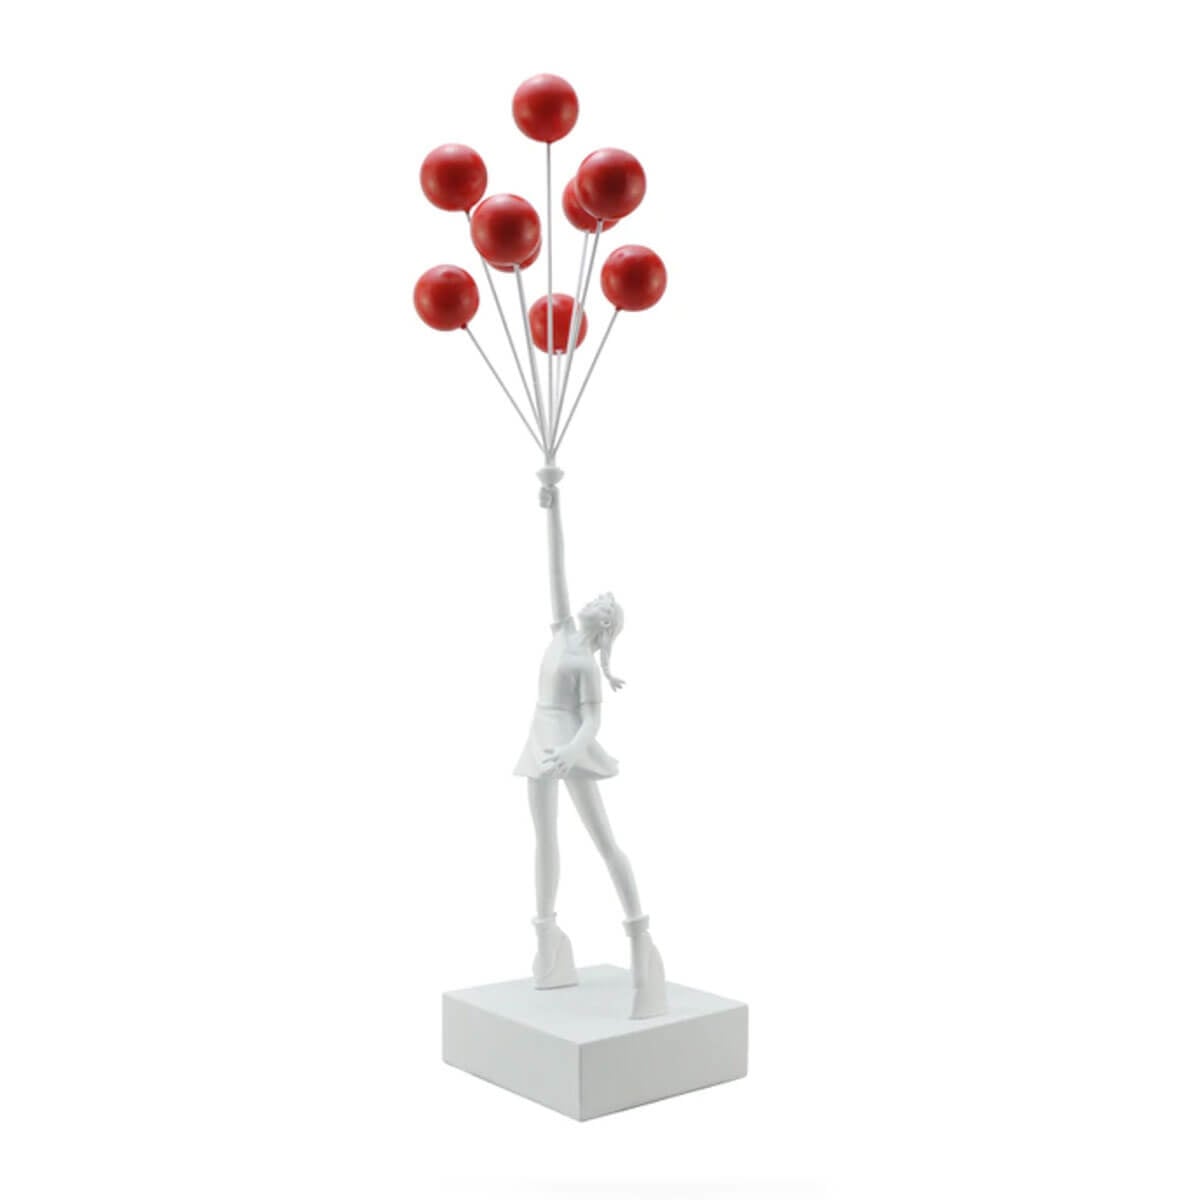 Flying Balloon Girl Banksy Sculpture - White Red